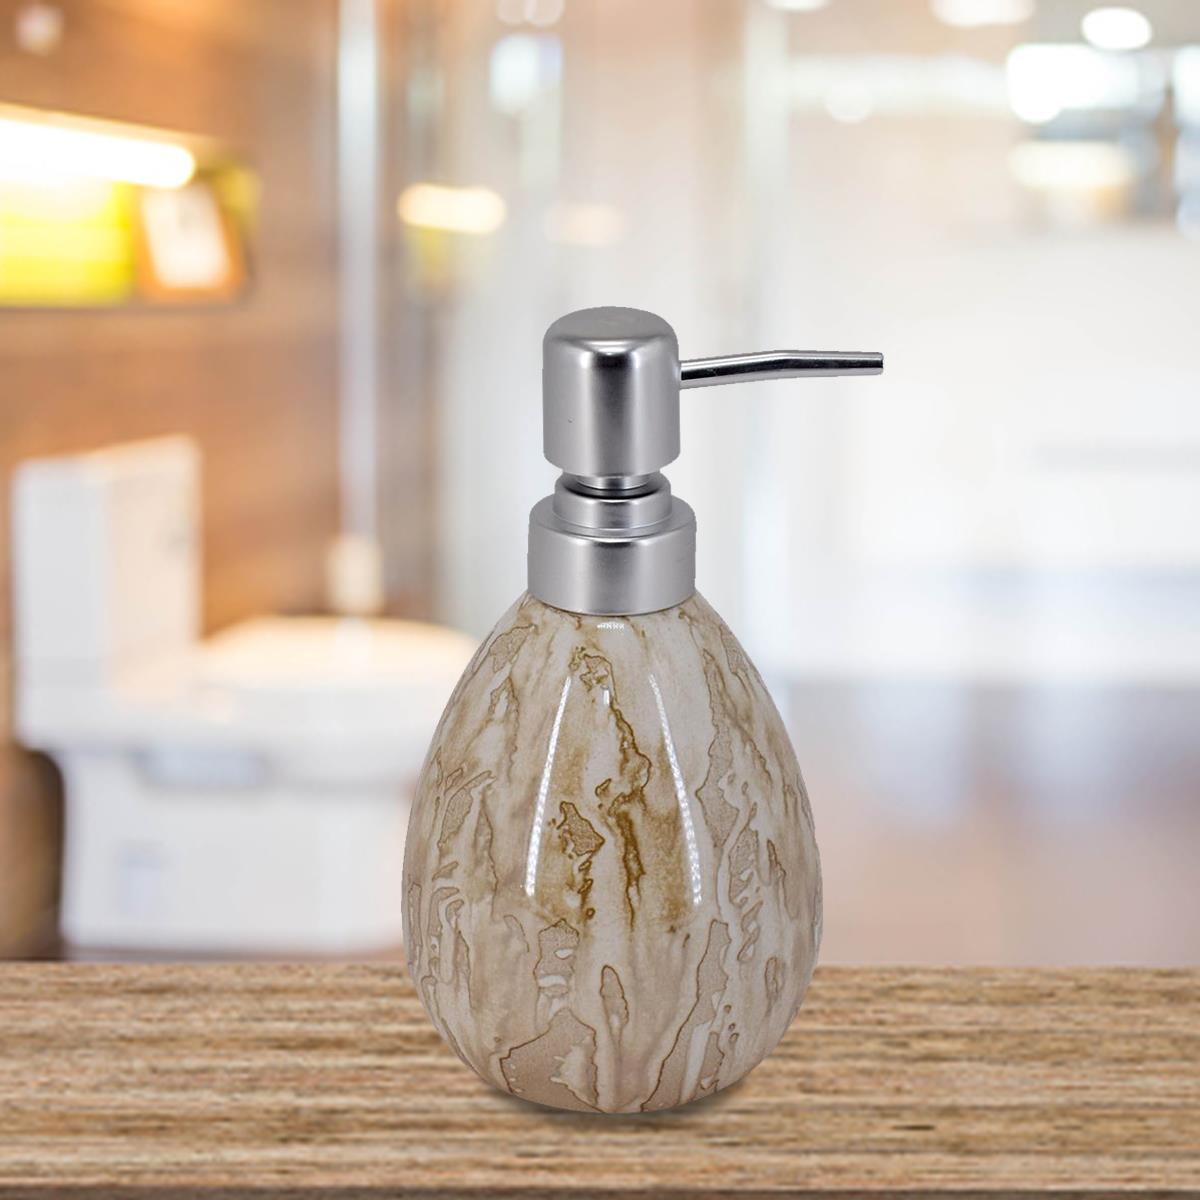 Kookee Ceramic Soap Dispenser for Bathroom handwash, refillable pump bottle for Kitchen hand wash basin, Set of 1, Cream (7615)